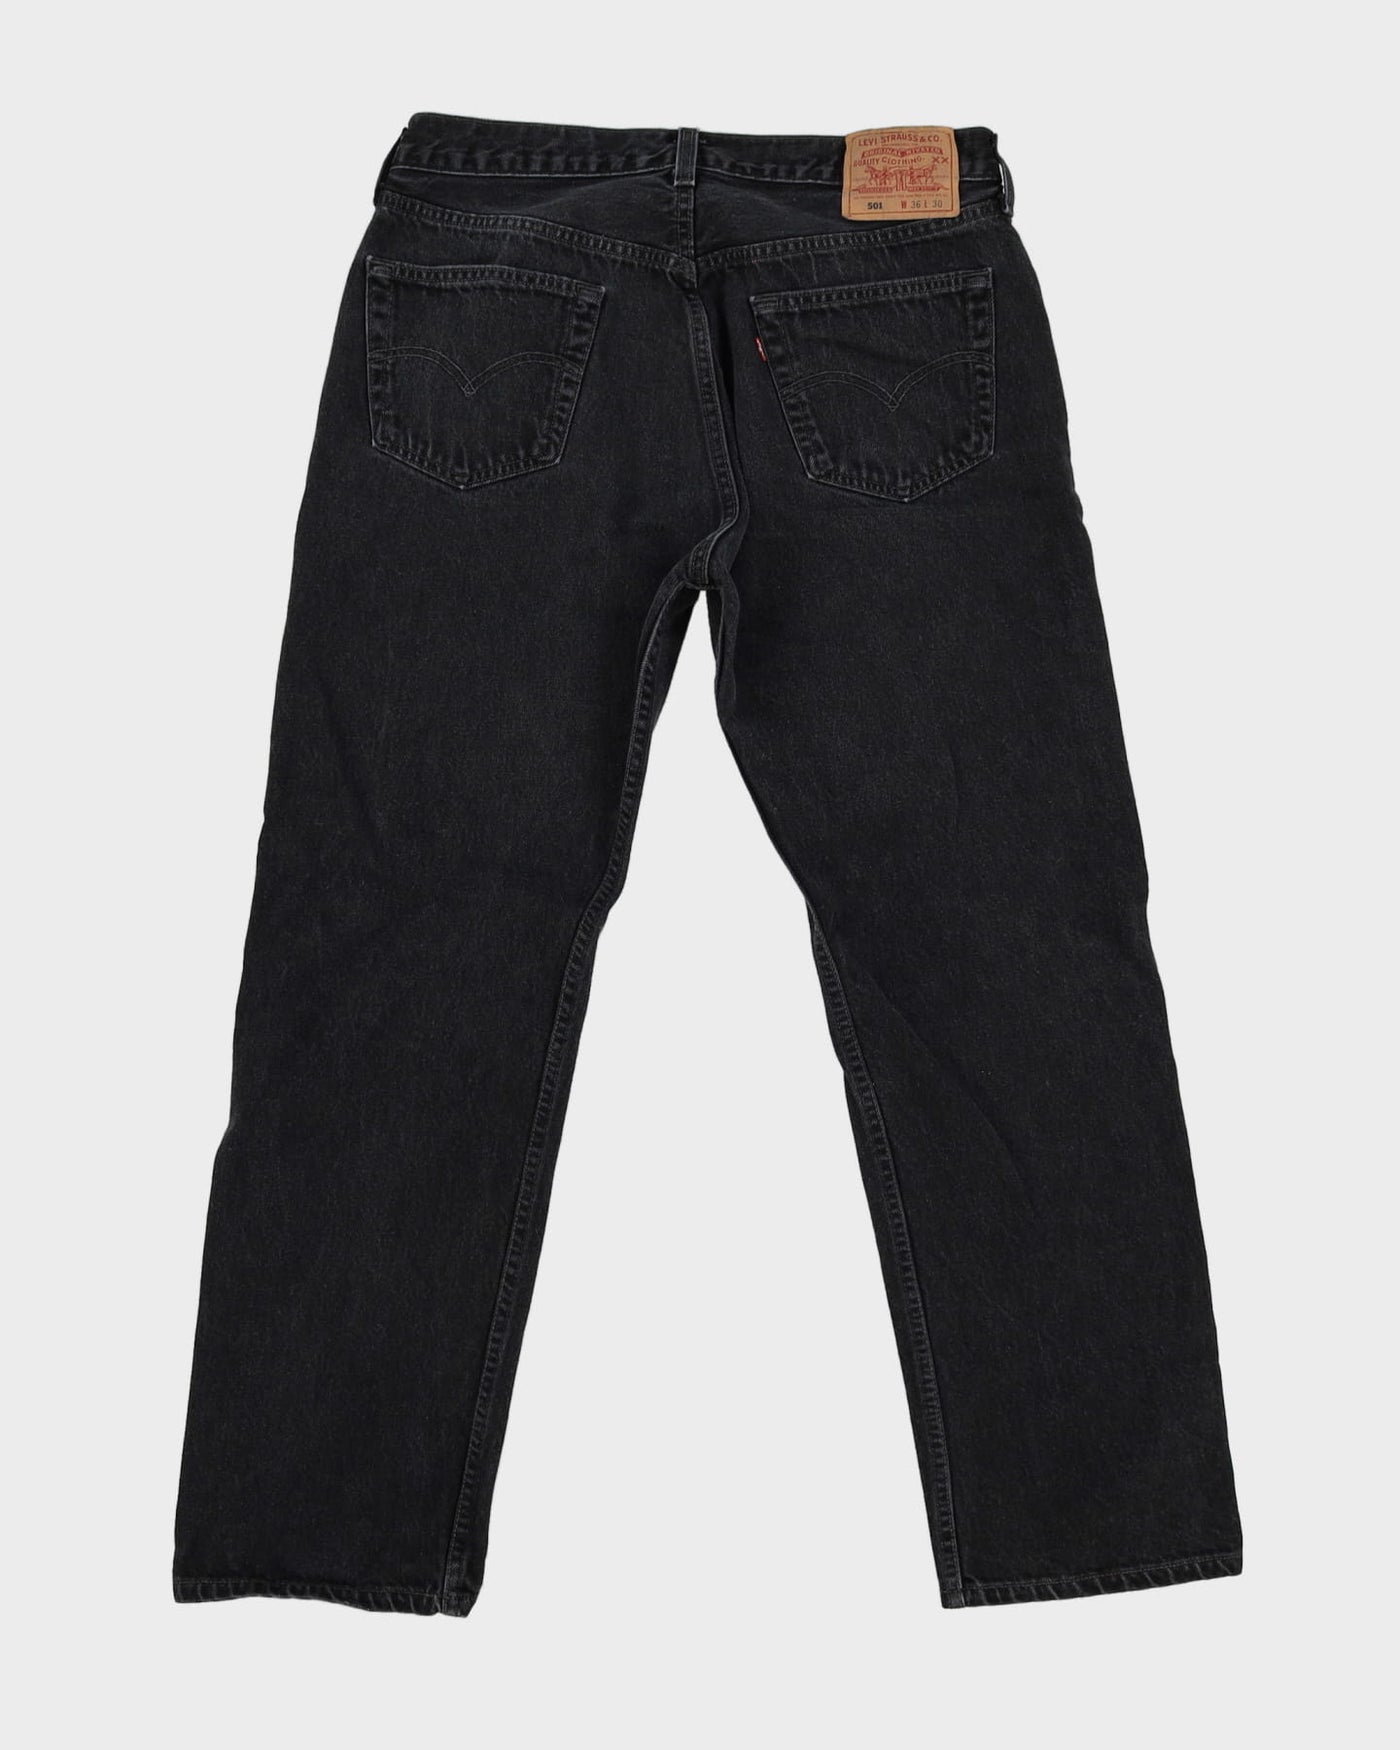 Vintage 90s Levi's 501 Grey Dark Wash Jeans - W34 L30